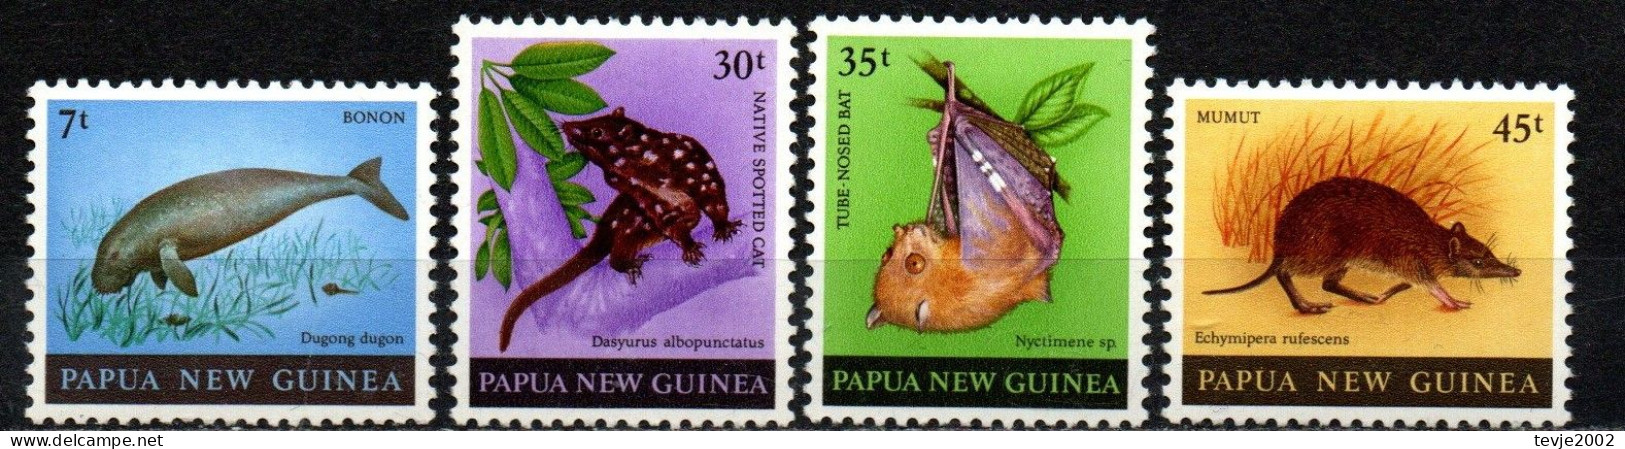 Papau Neuguinea 1980 - Mi.Nr. 398 - 401 - Postfrisch MNH - Tiere Animals - Papua-Neuguinea